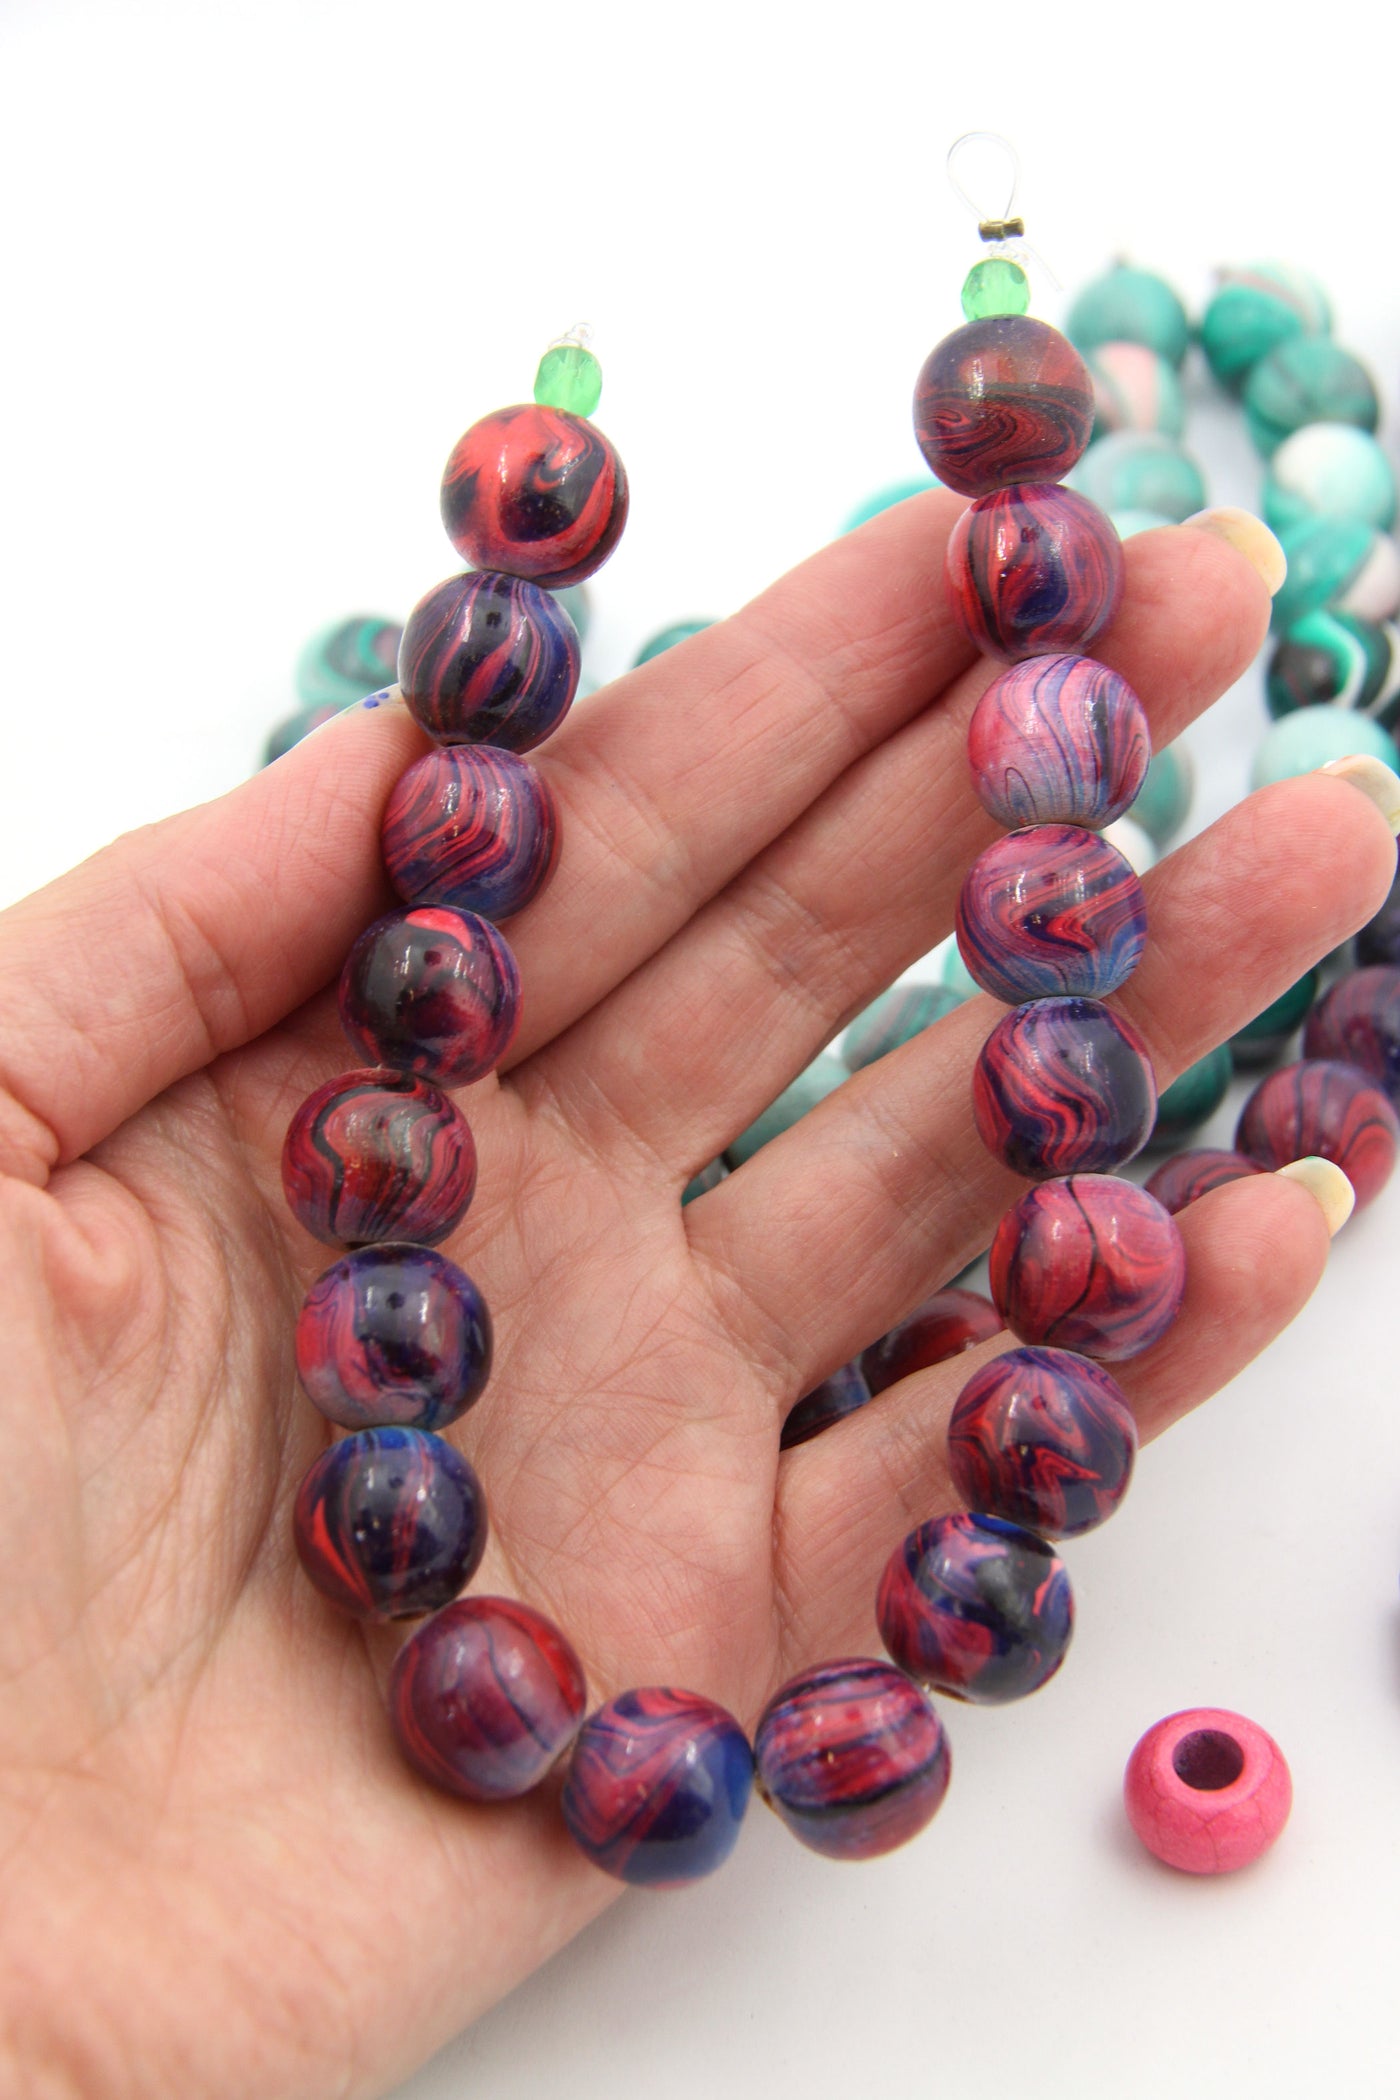 Vintage Marbleized Wood Beads, Round, 15mm, 18 beads